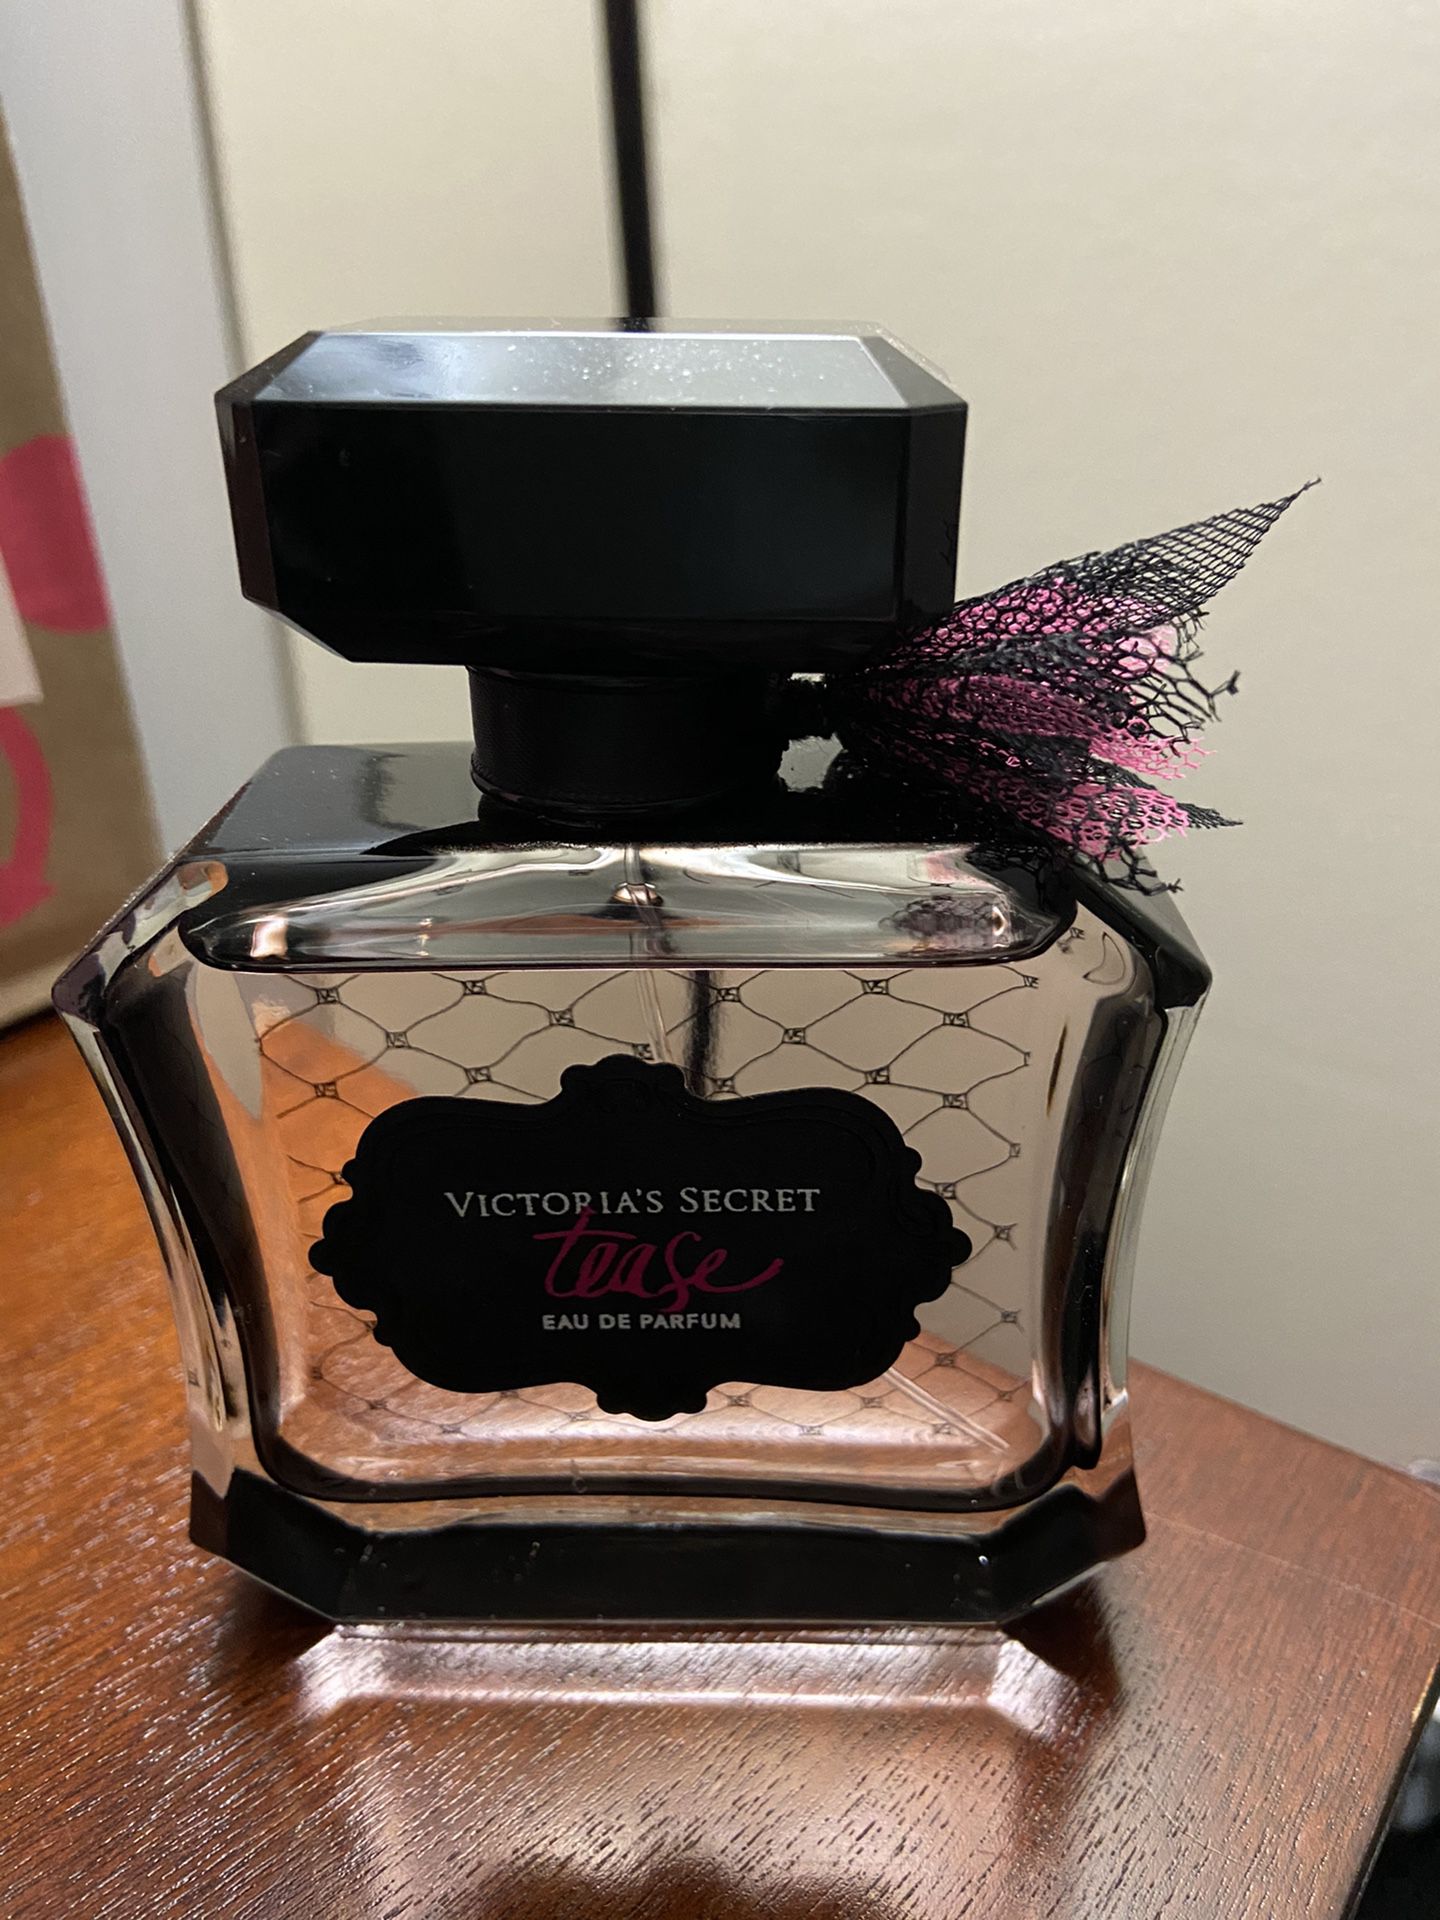 Victoria secret Tease Perfume 3.4 oz the BIG bottle!